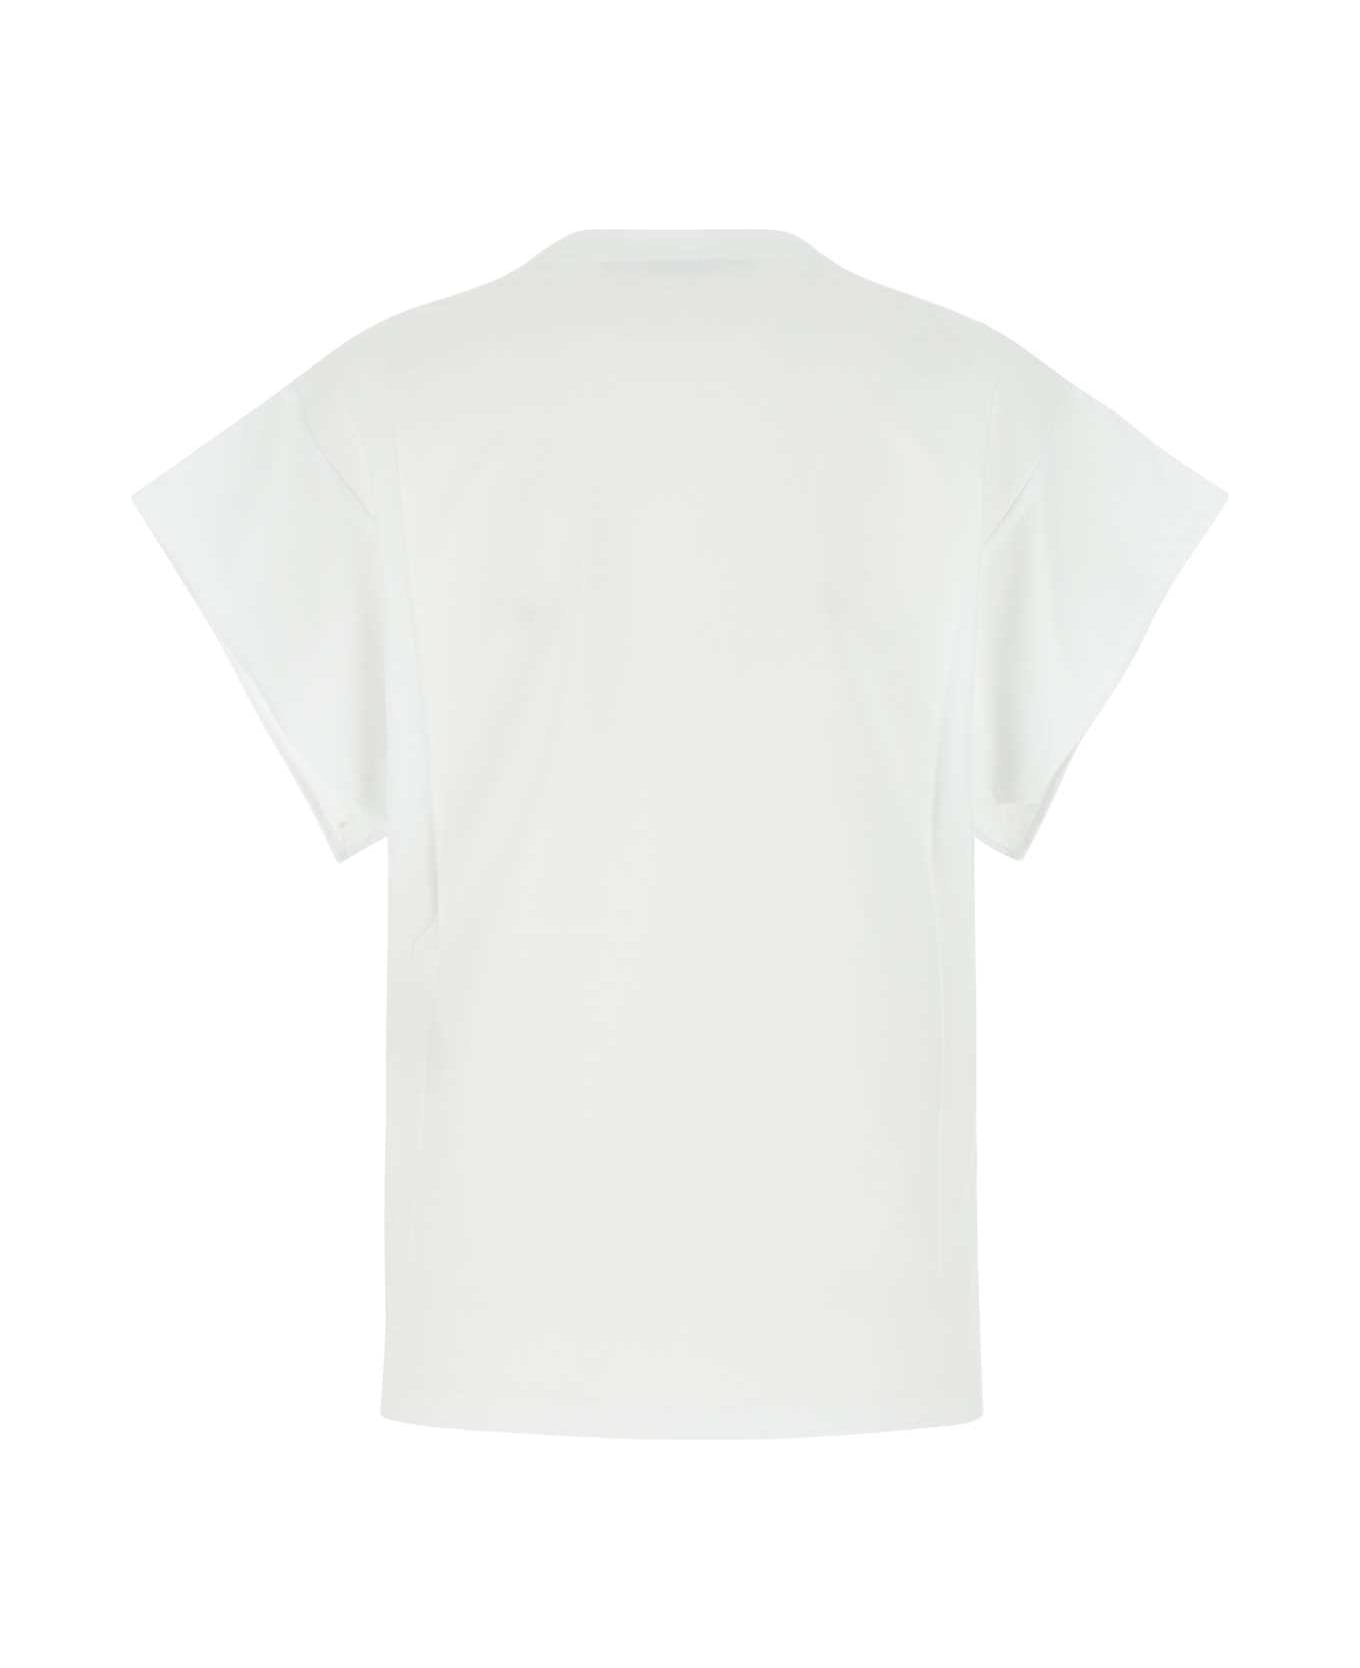 Stella McCartney White Cotton T-shirt - 9000